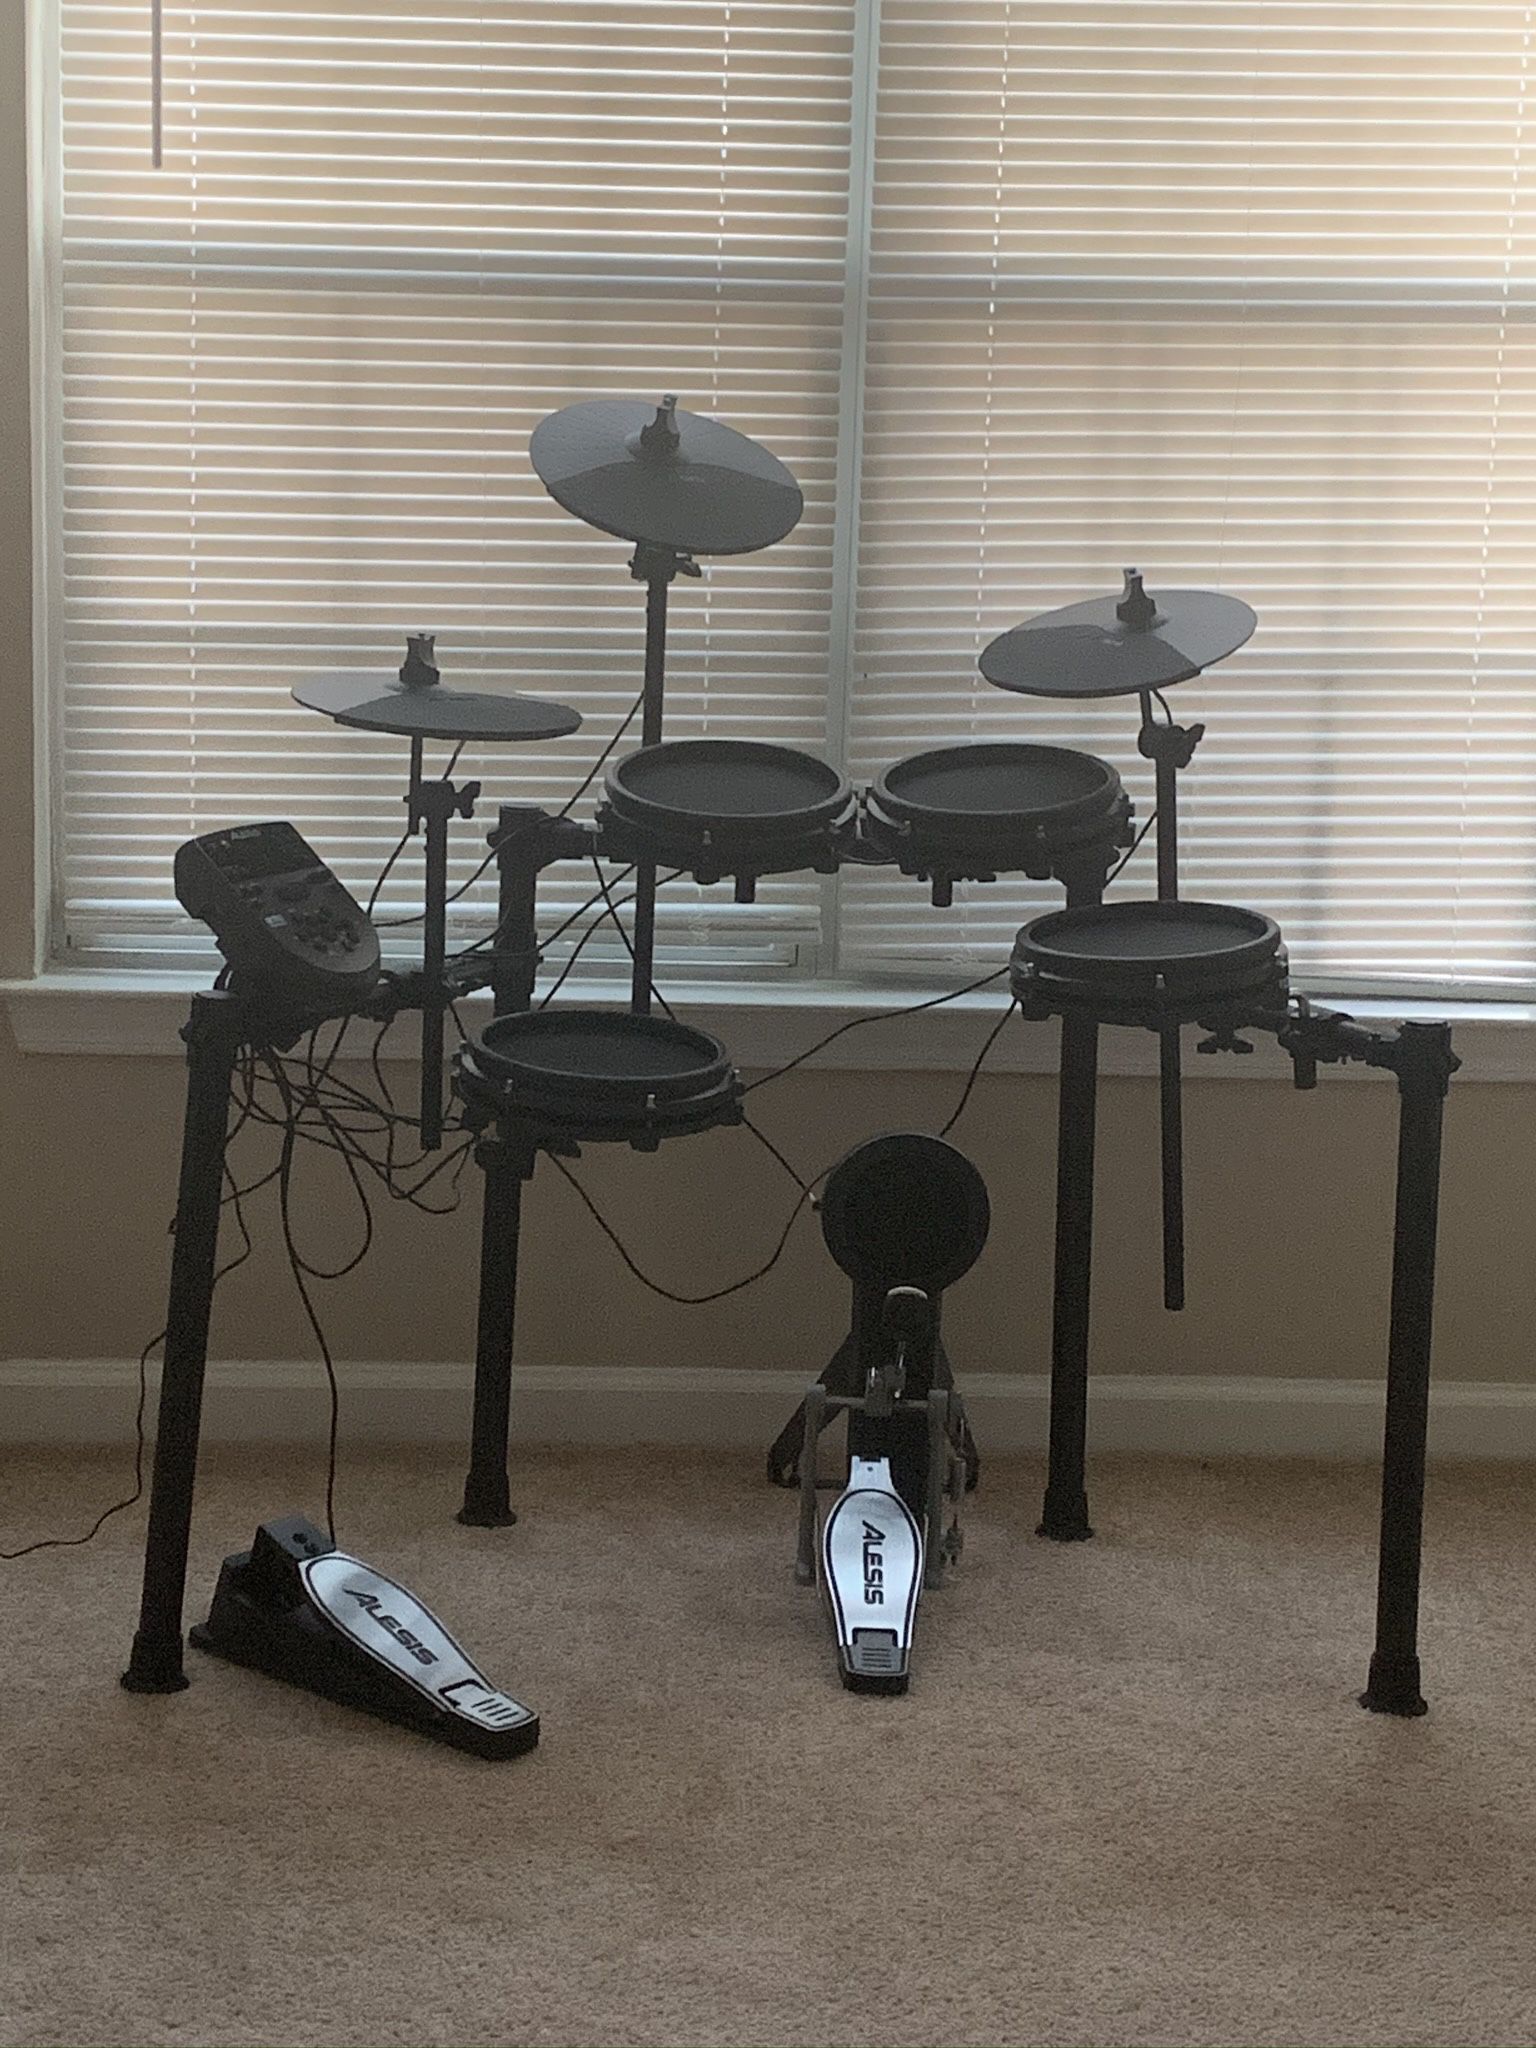 Electric Drum Set 